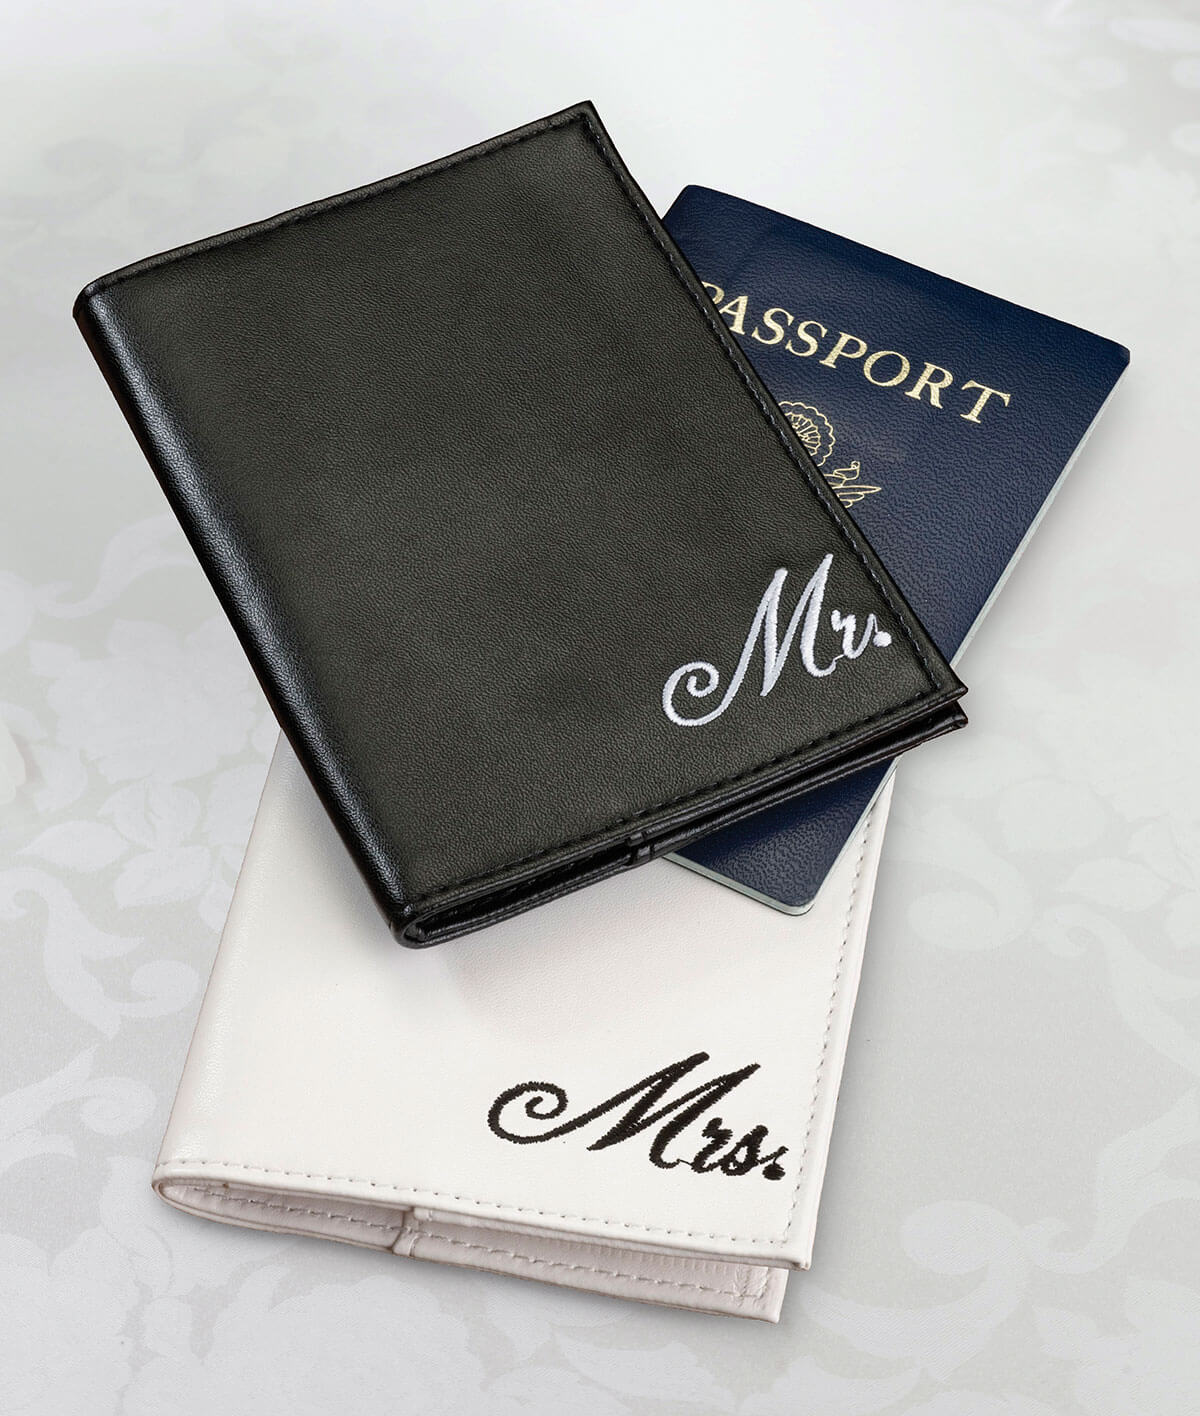 Mr. & Mrs. Passport Covers - image 2 of 2